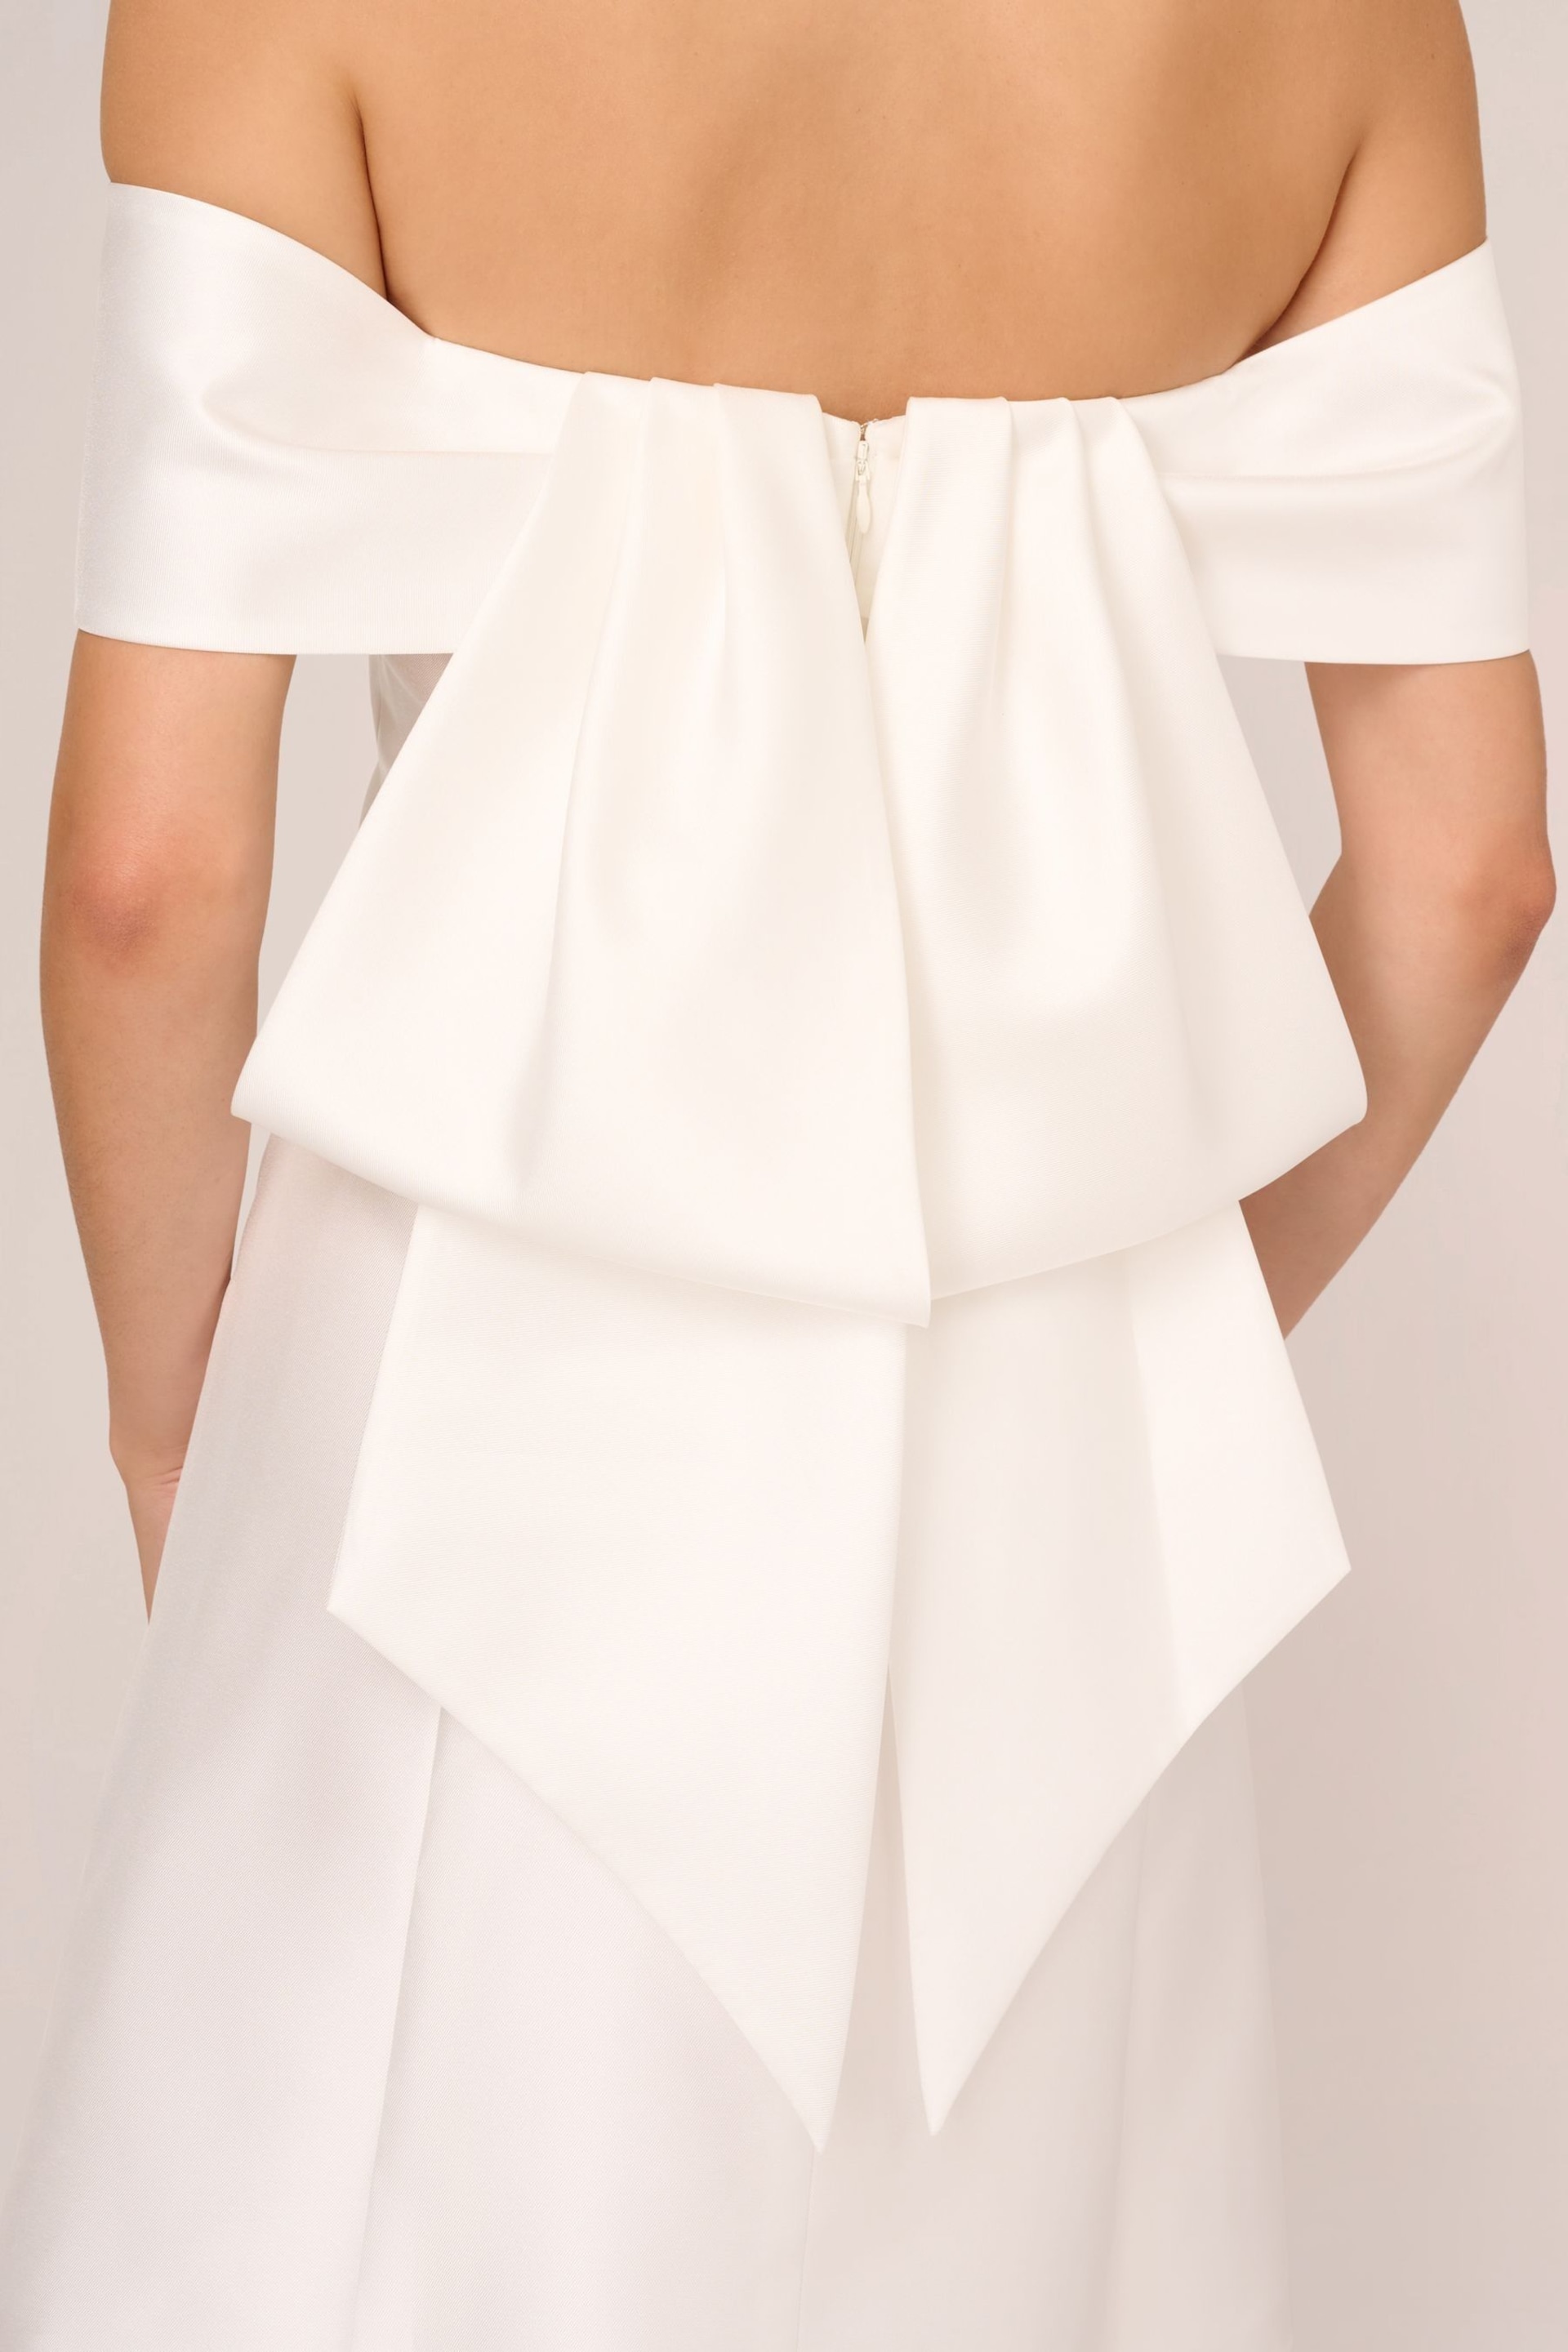 Adrianna Papell Mikado Bow Short White Dress - Image 5 of 7